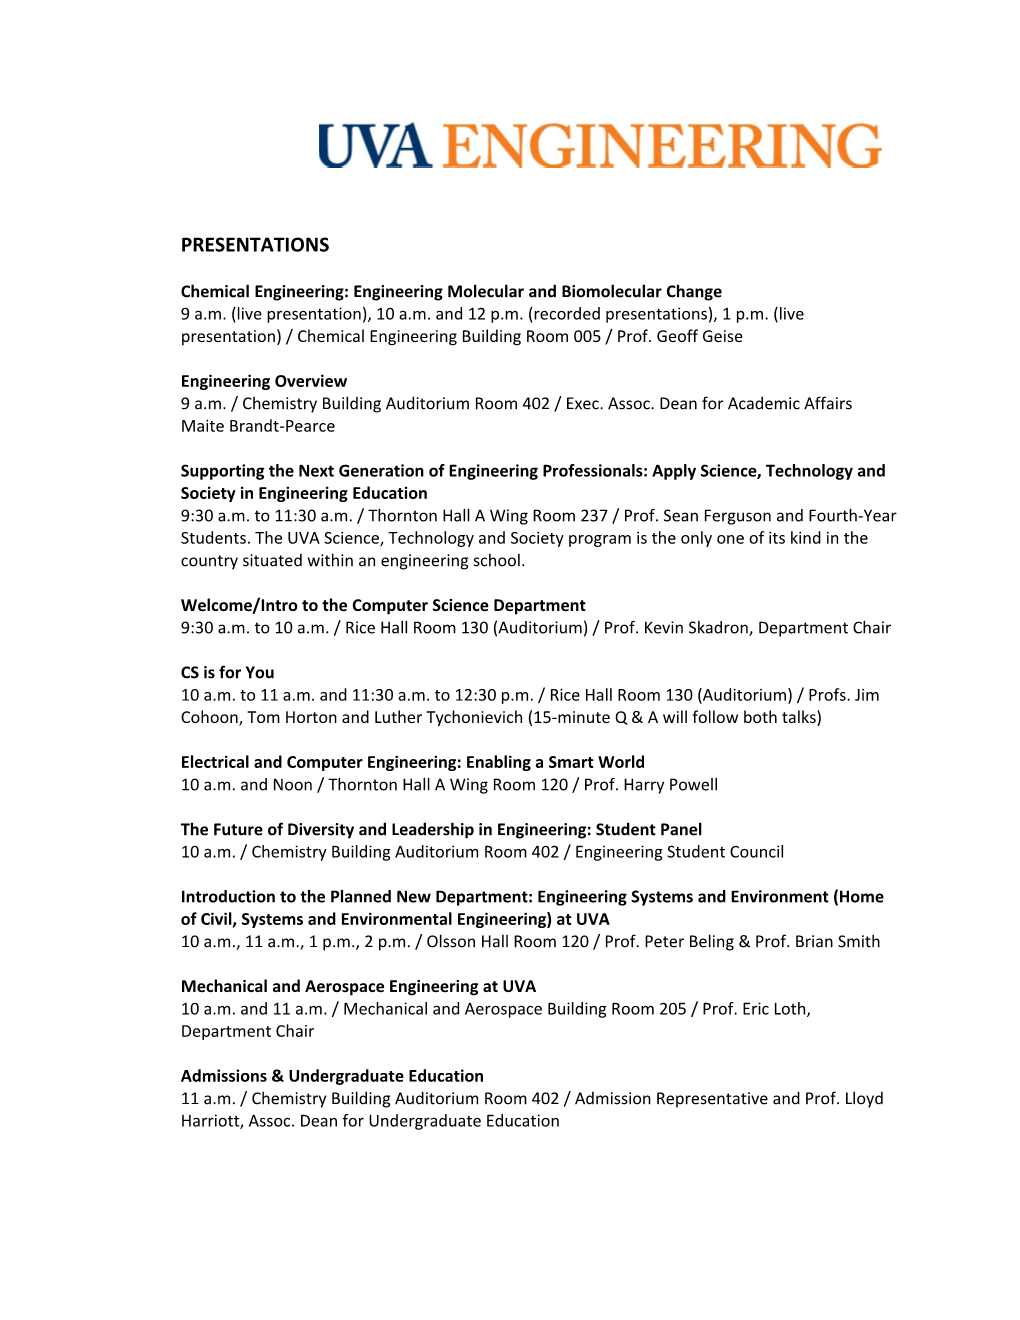 Chemical Engineering: Engineering Molecular and Biomolecular Change